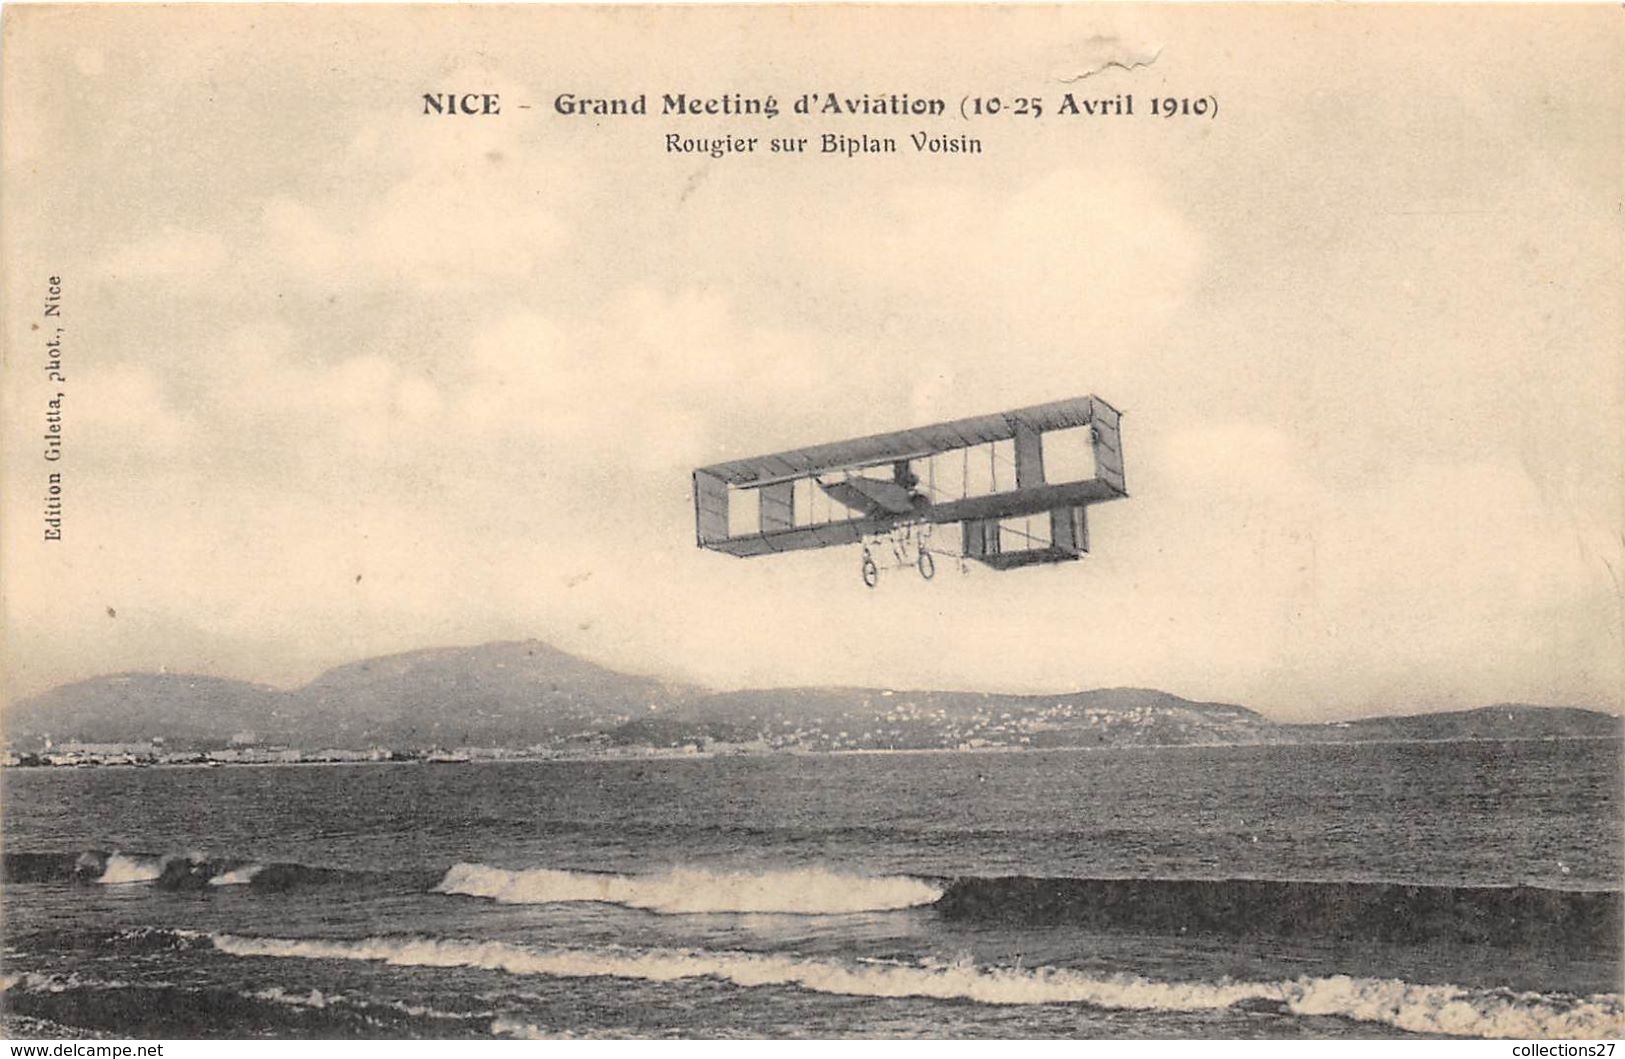 06-NICE- GRAND MEETING D'AVIATION, 10-25 AVRIEL 1910 - ROUGIER SUR BIPLAN VOISIN - Märkte